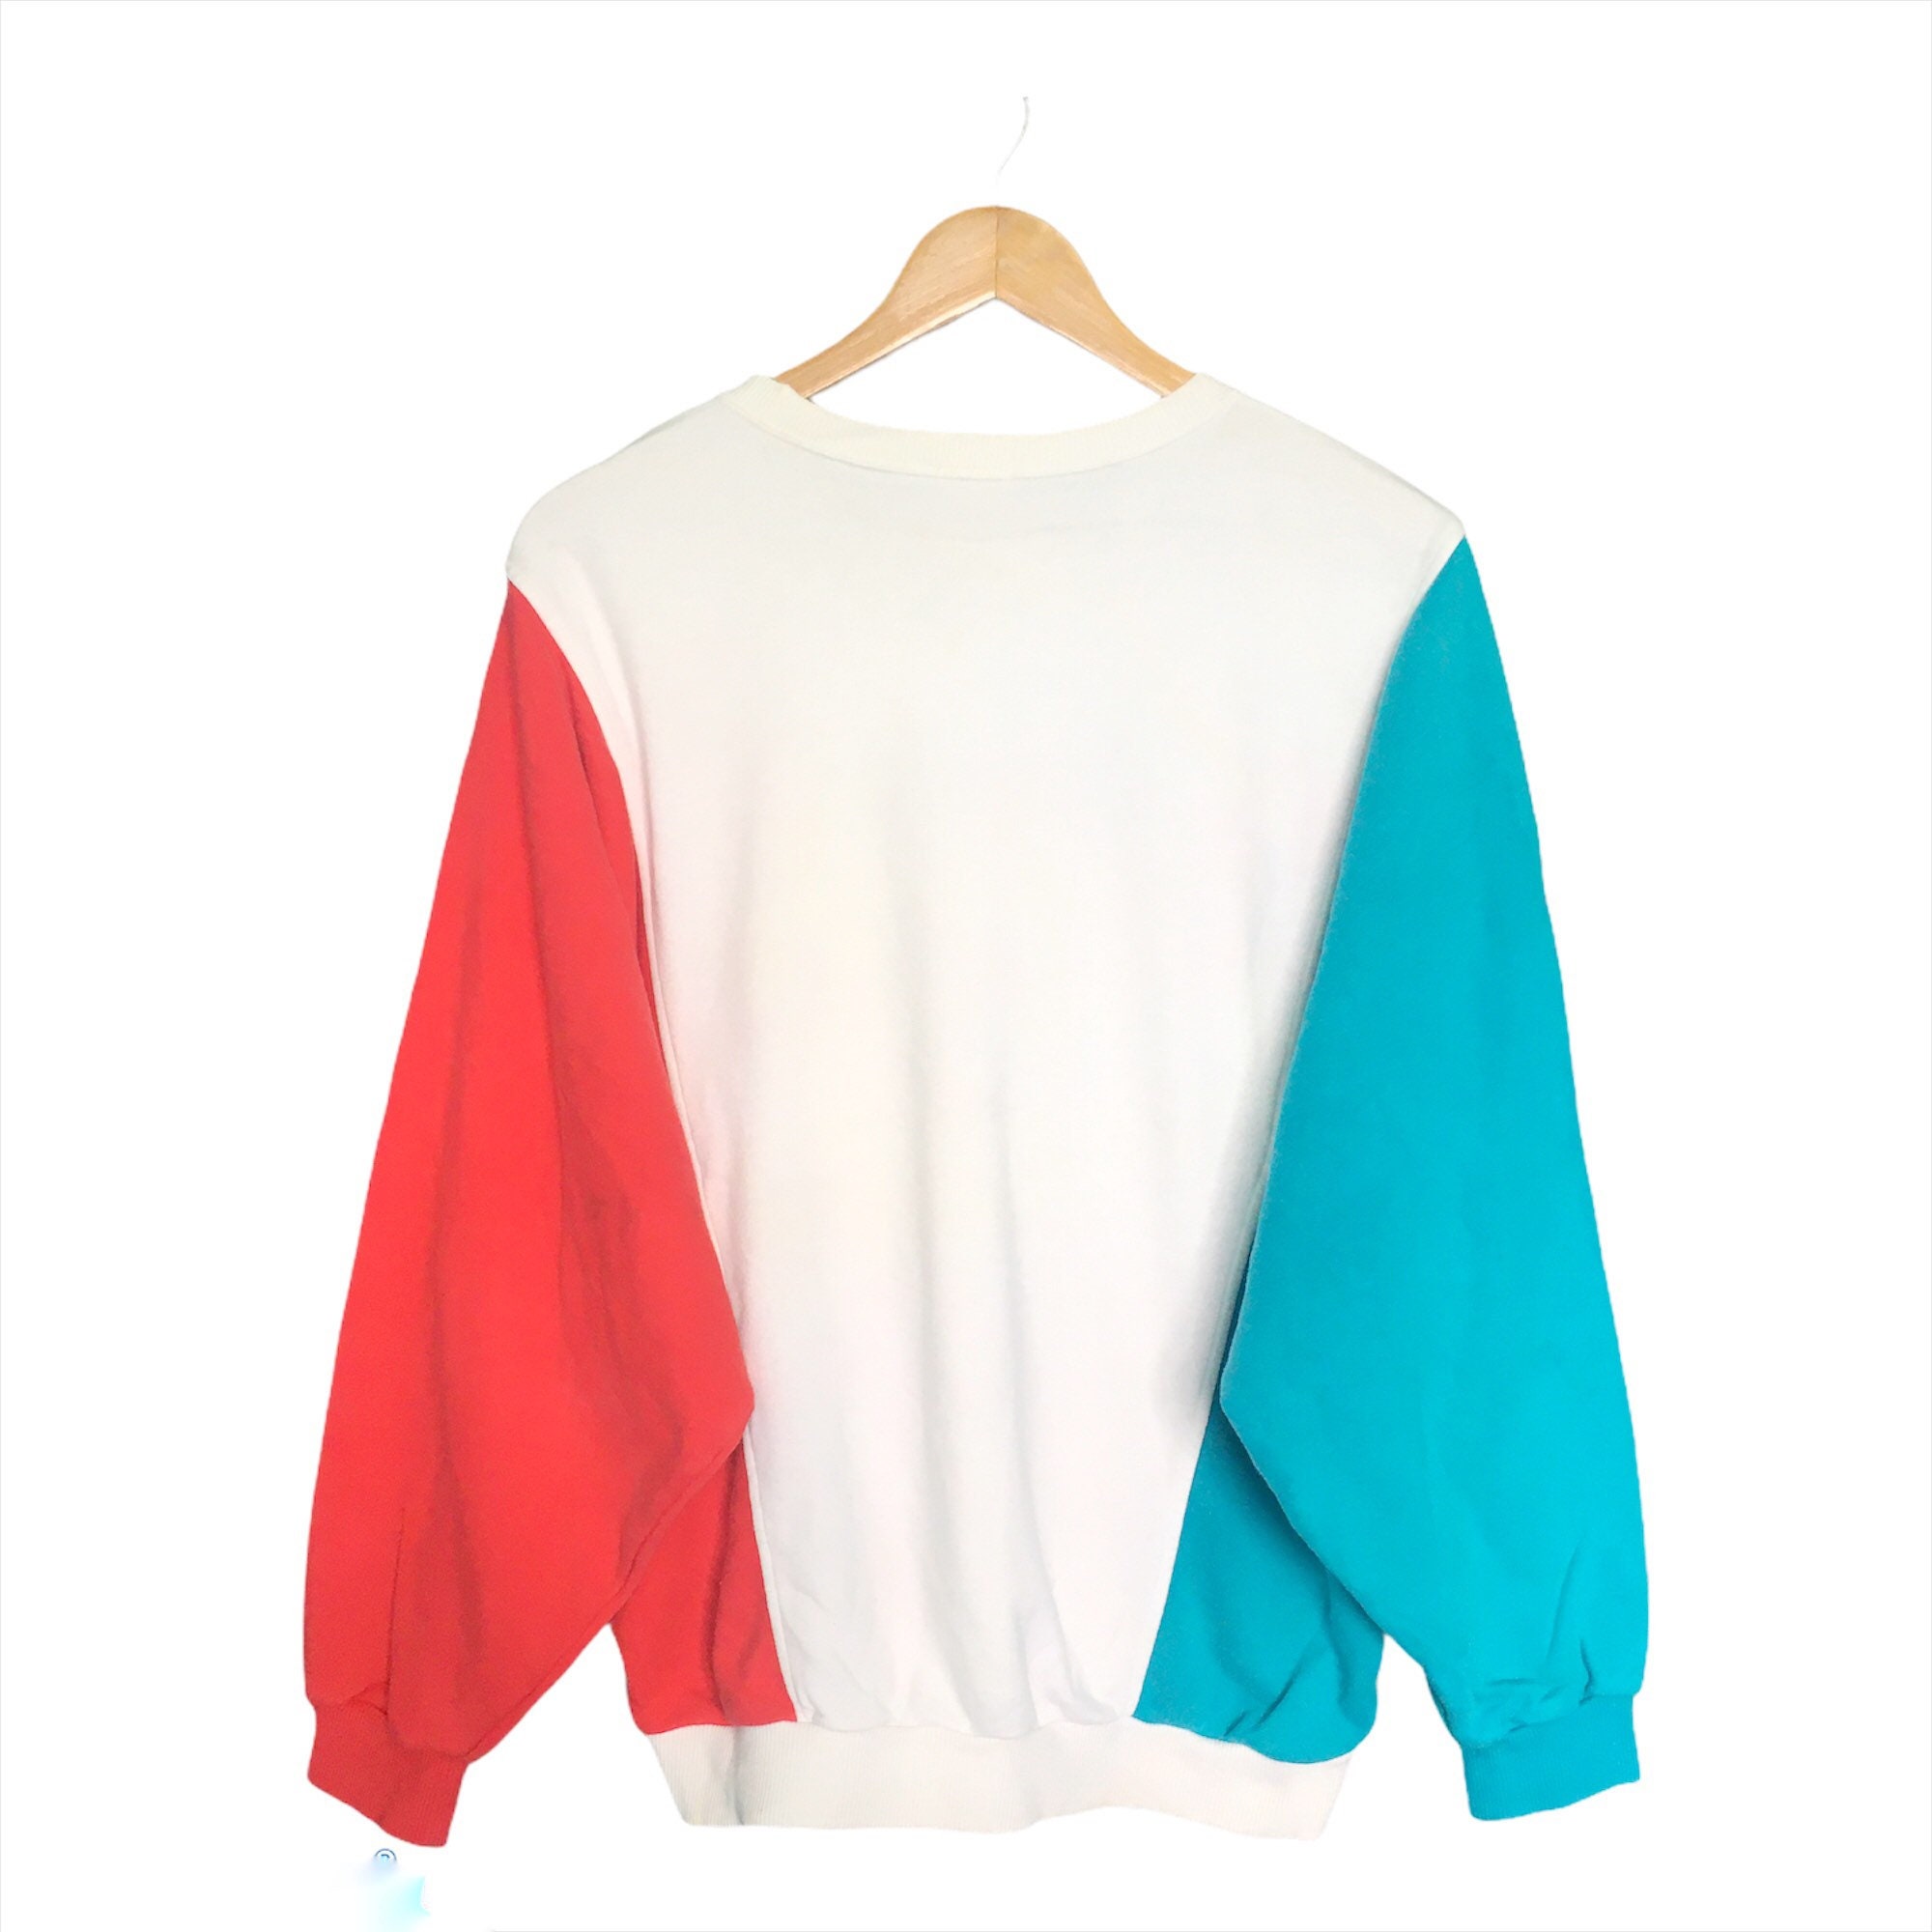 Ellesse Tablido Sweatshirt Sizes XL, XXL Navy RRP £50 Brand New CLASSIC  DESIGN